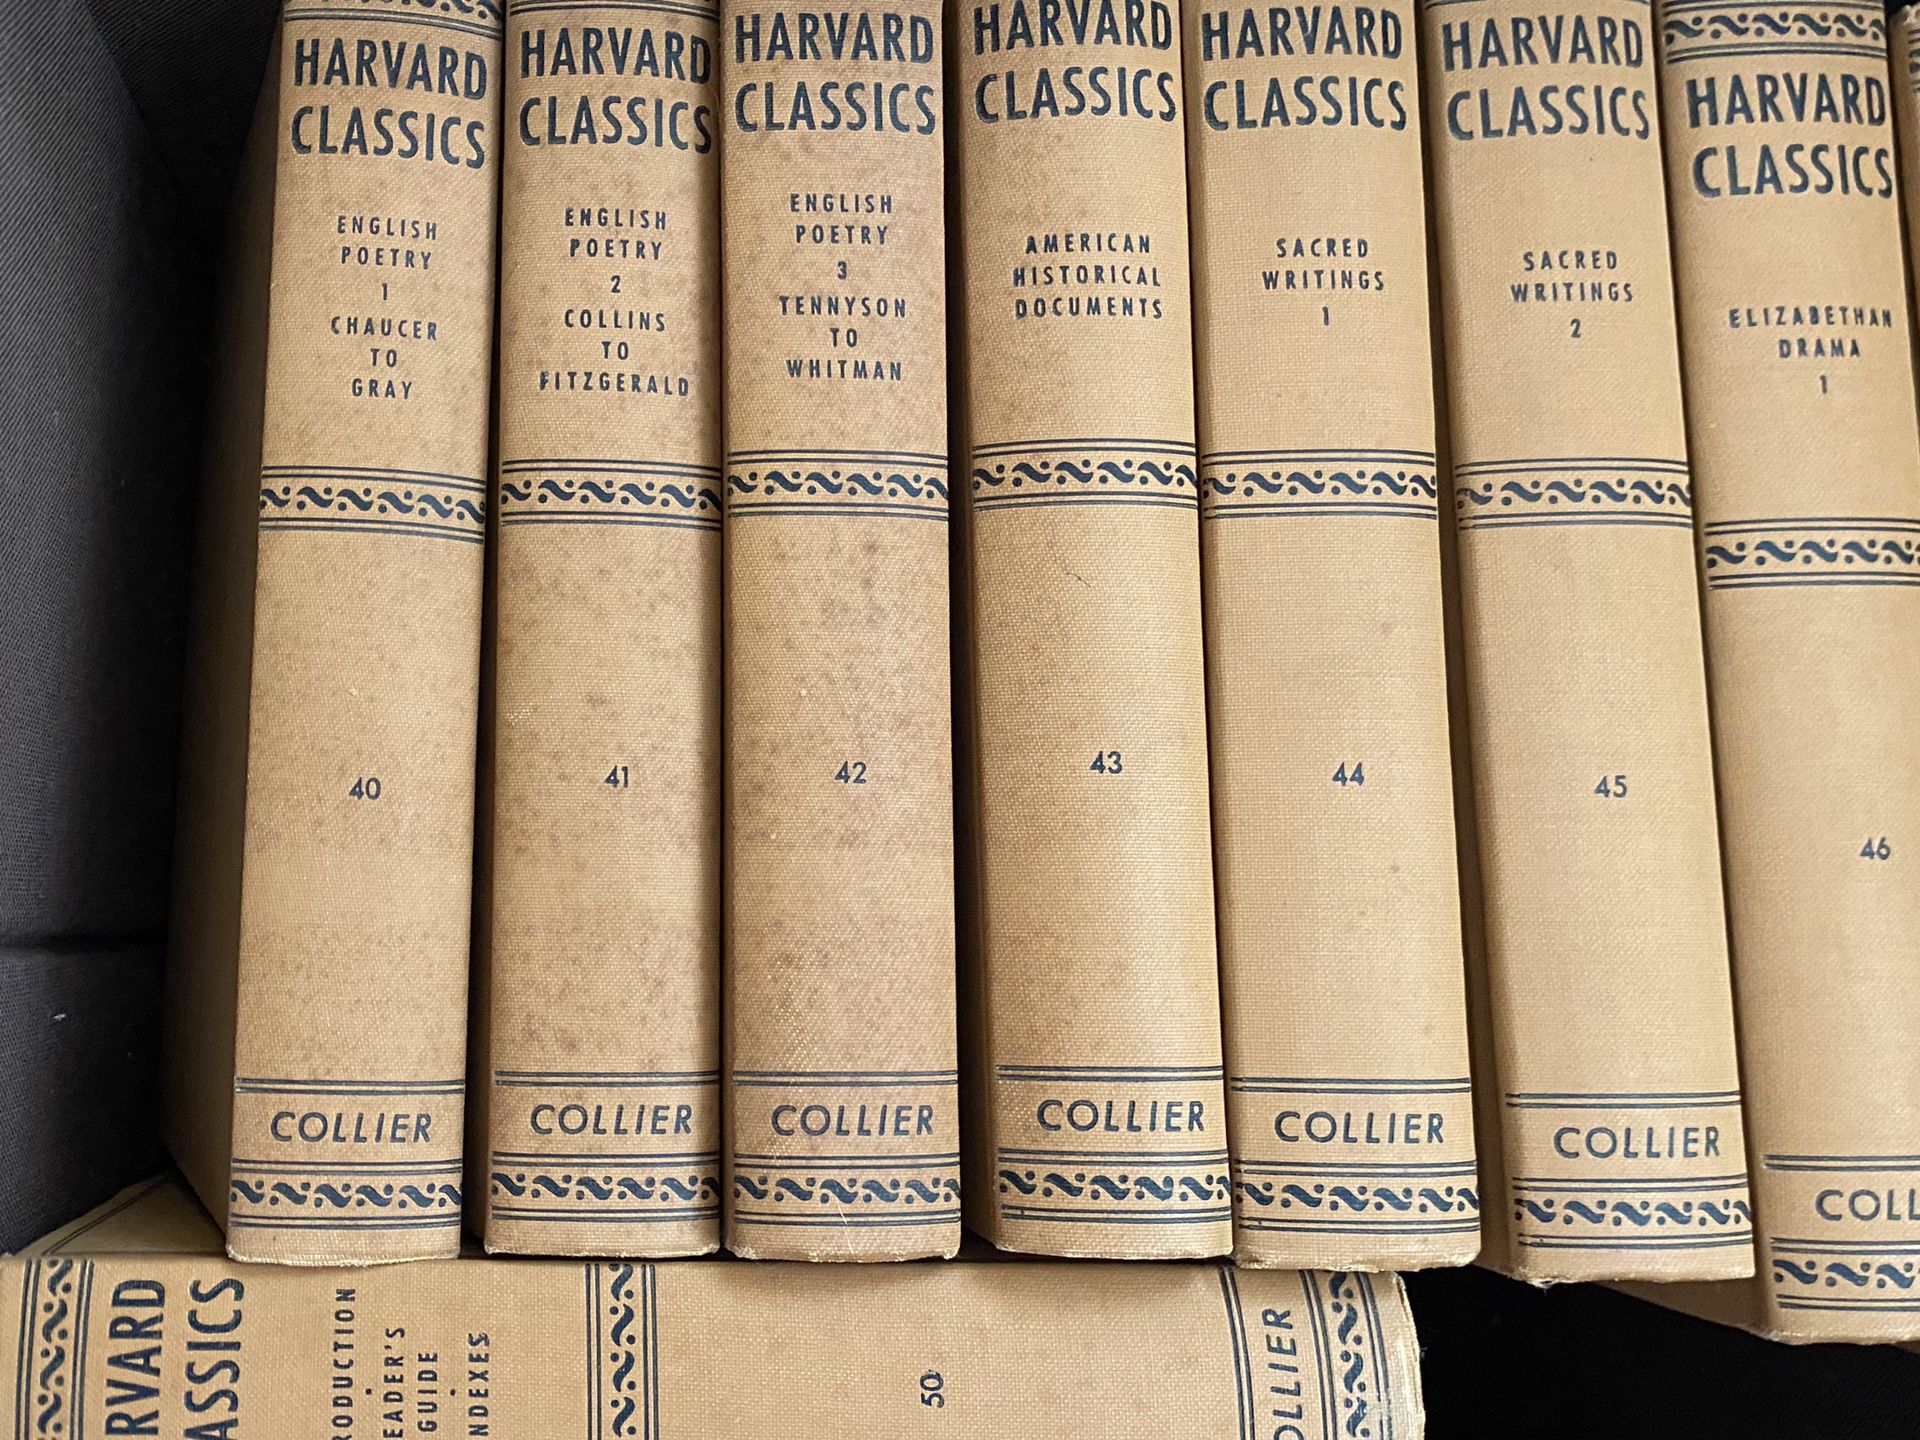 Harvard Classics Five-Foot Shelf of Books Complete